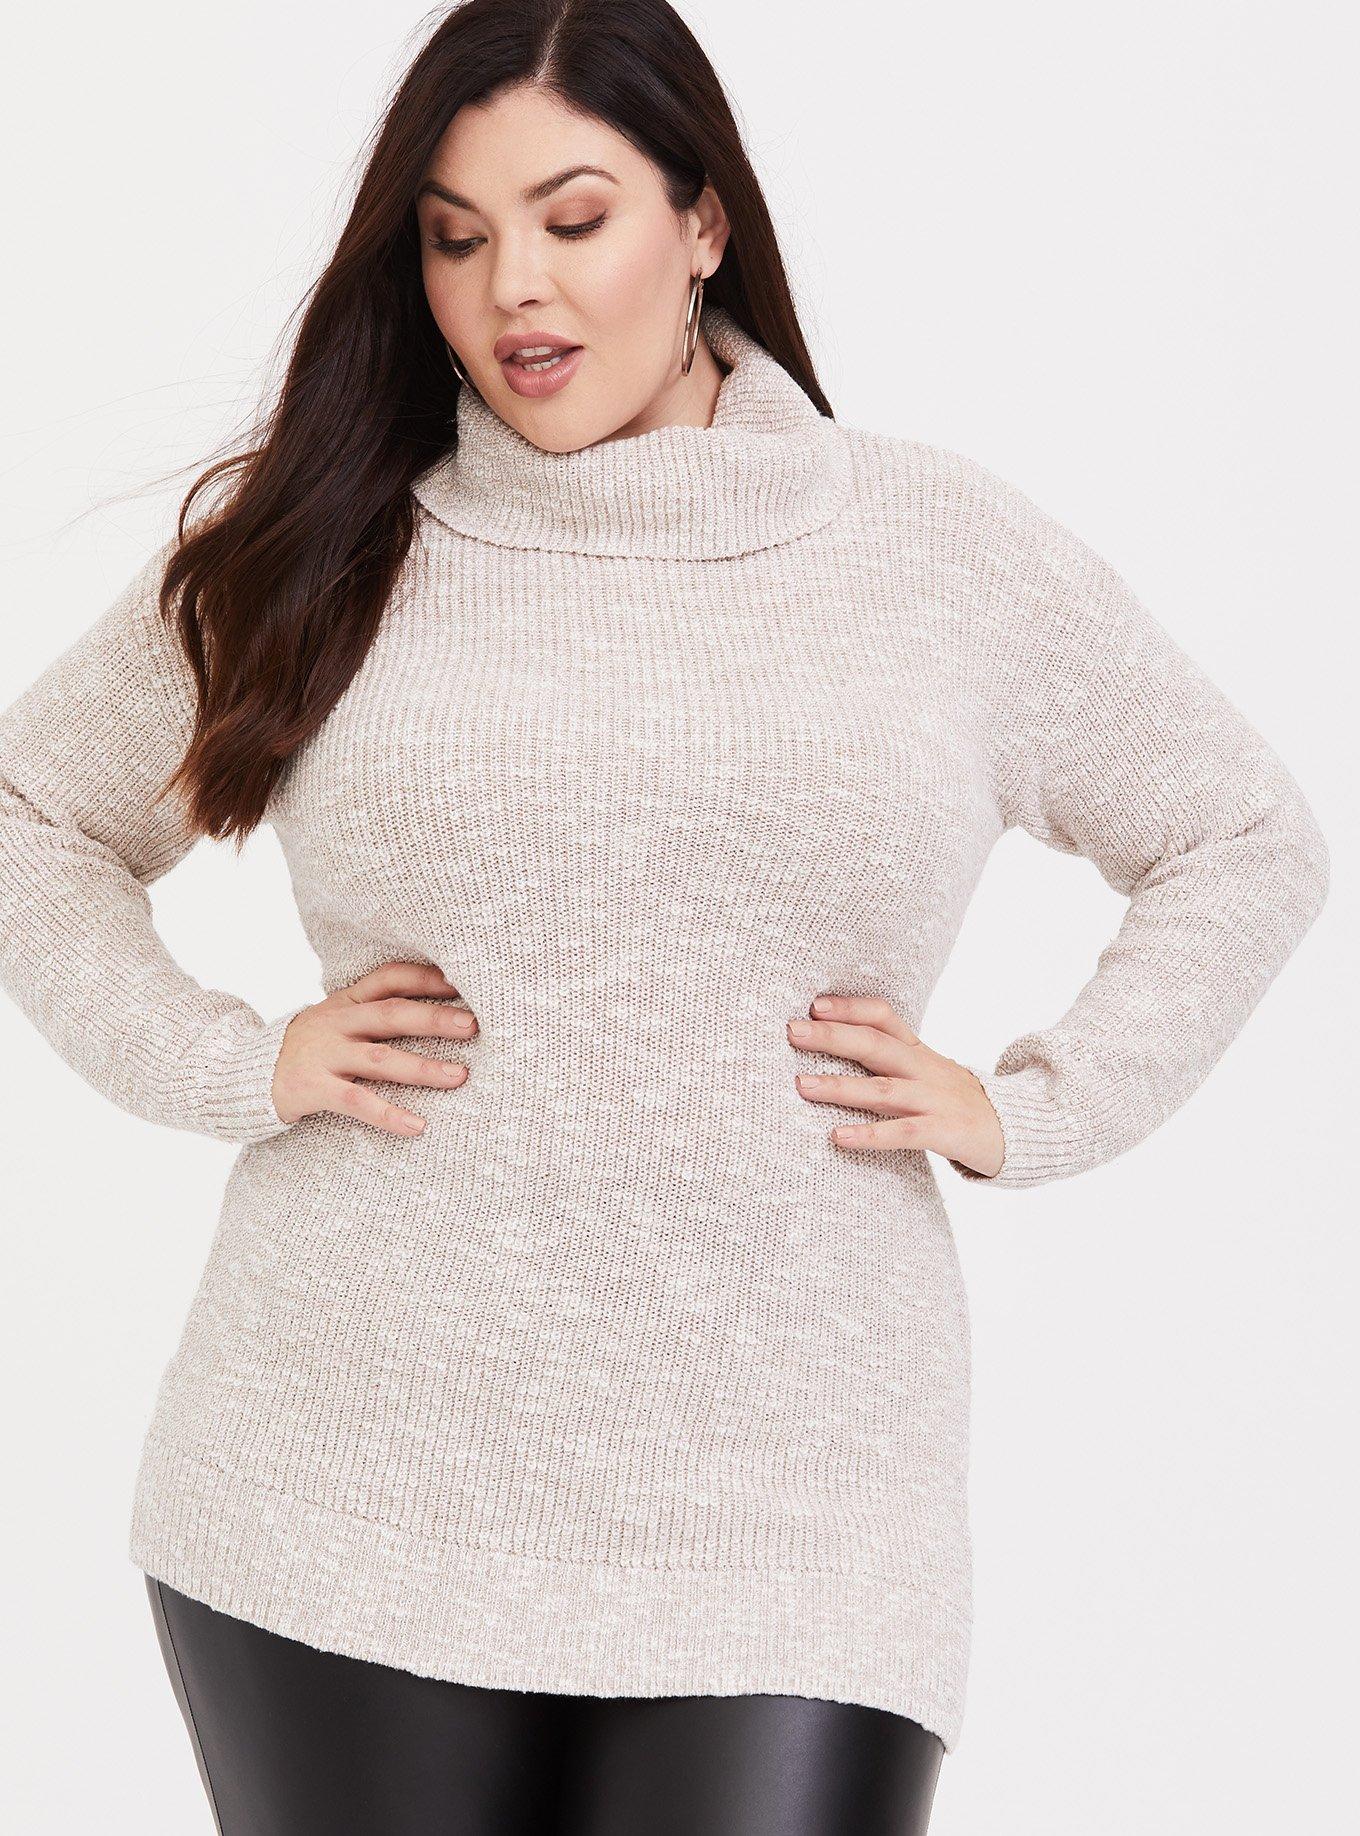 Plus Size - Tan Turtleneck Tunic Sweater - Torrid